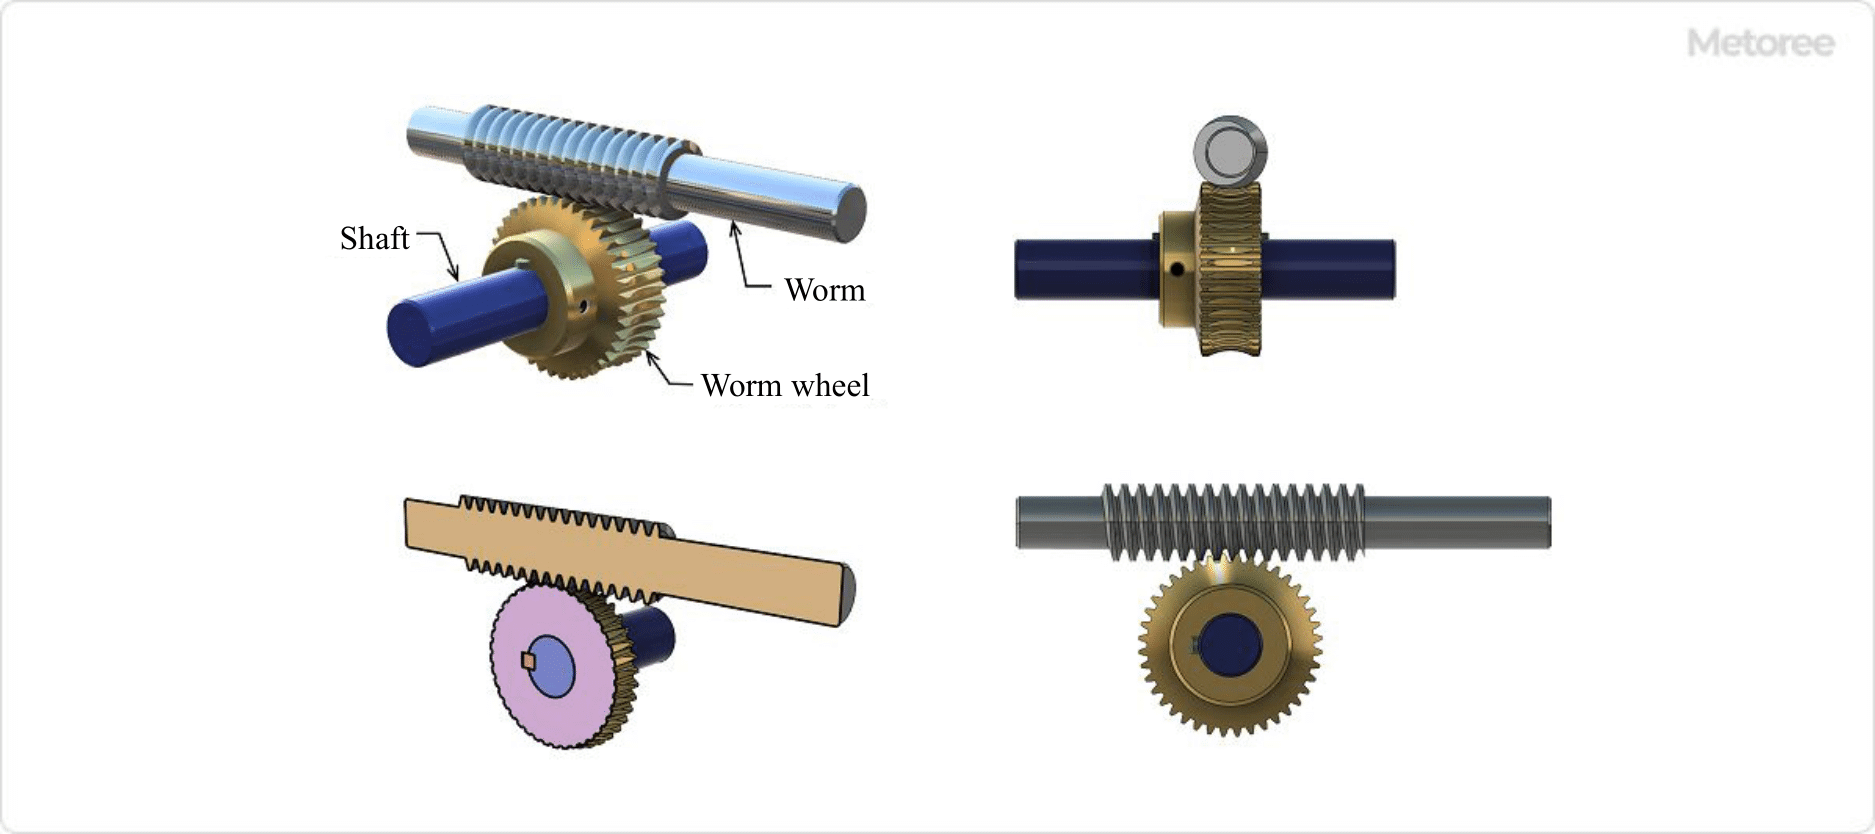 Figure 3. Worm gear assembly